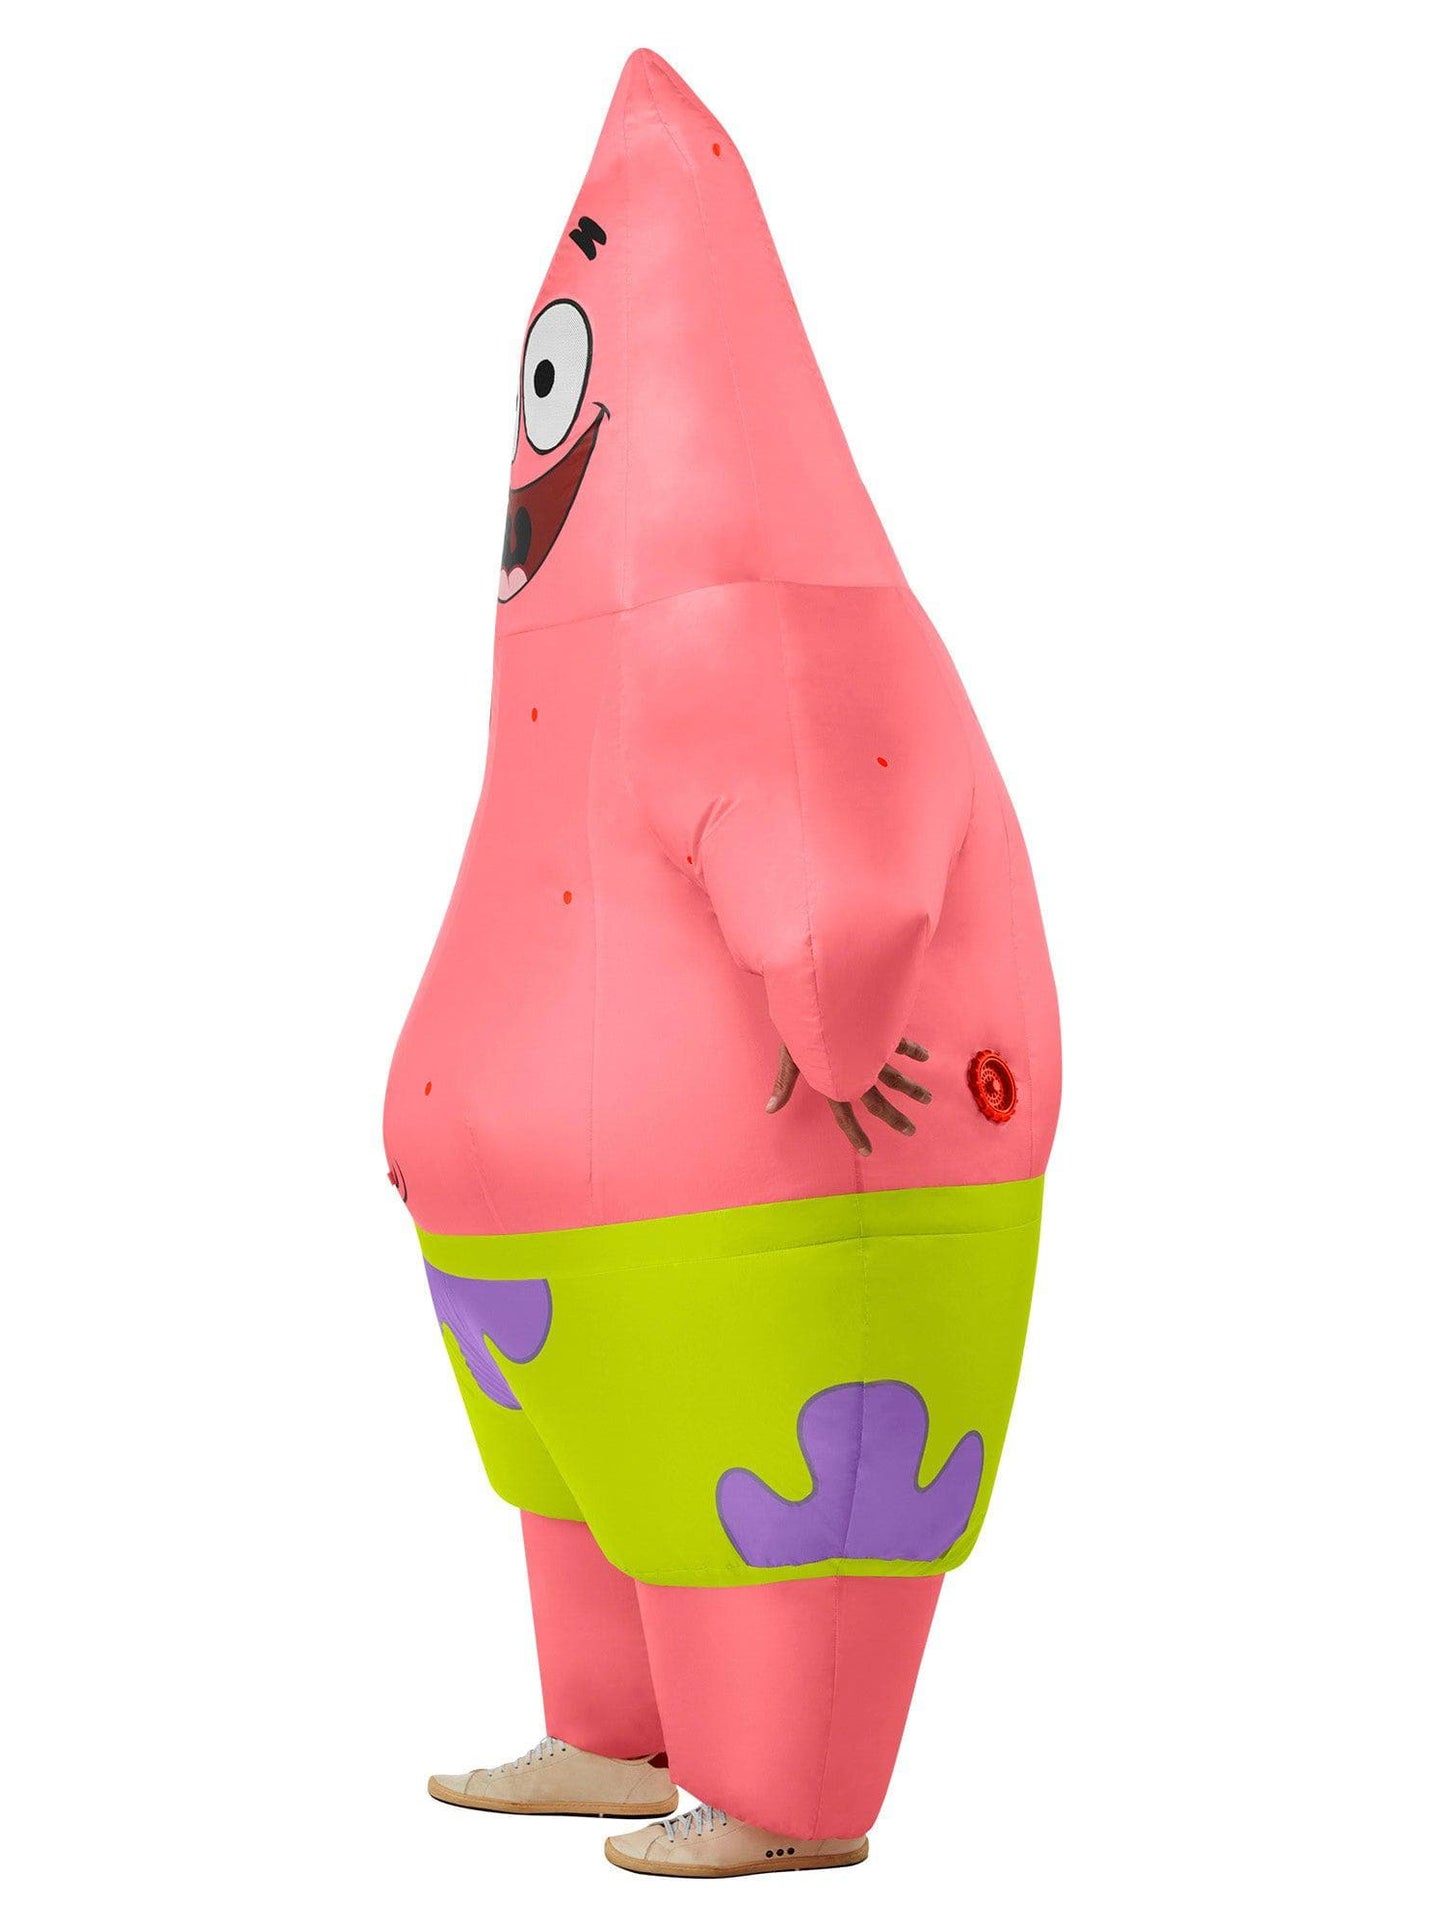 SpongeBob SquarePants Inflatable Patrick Star Adult Costume - Paramount Shop